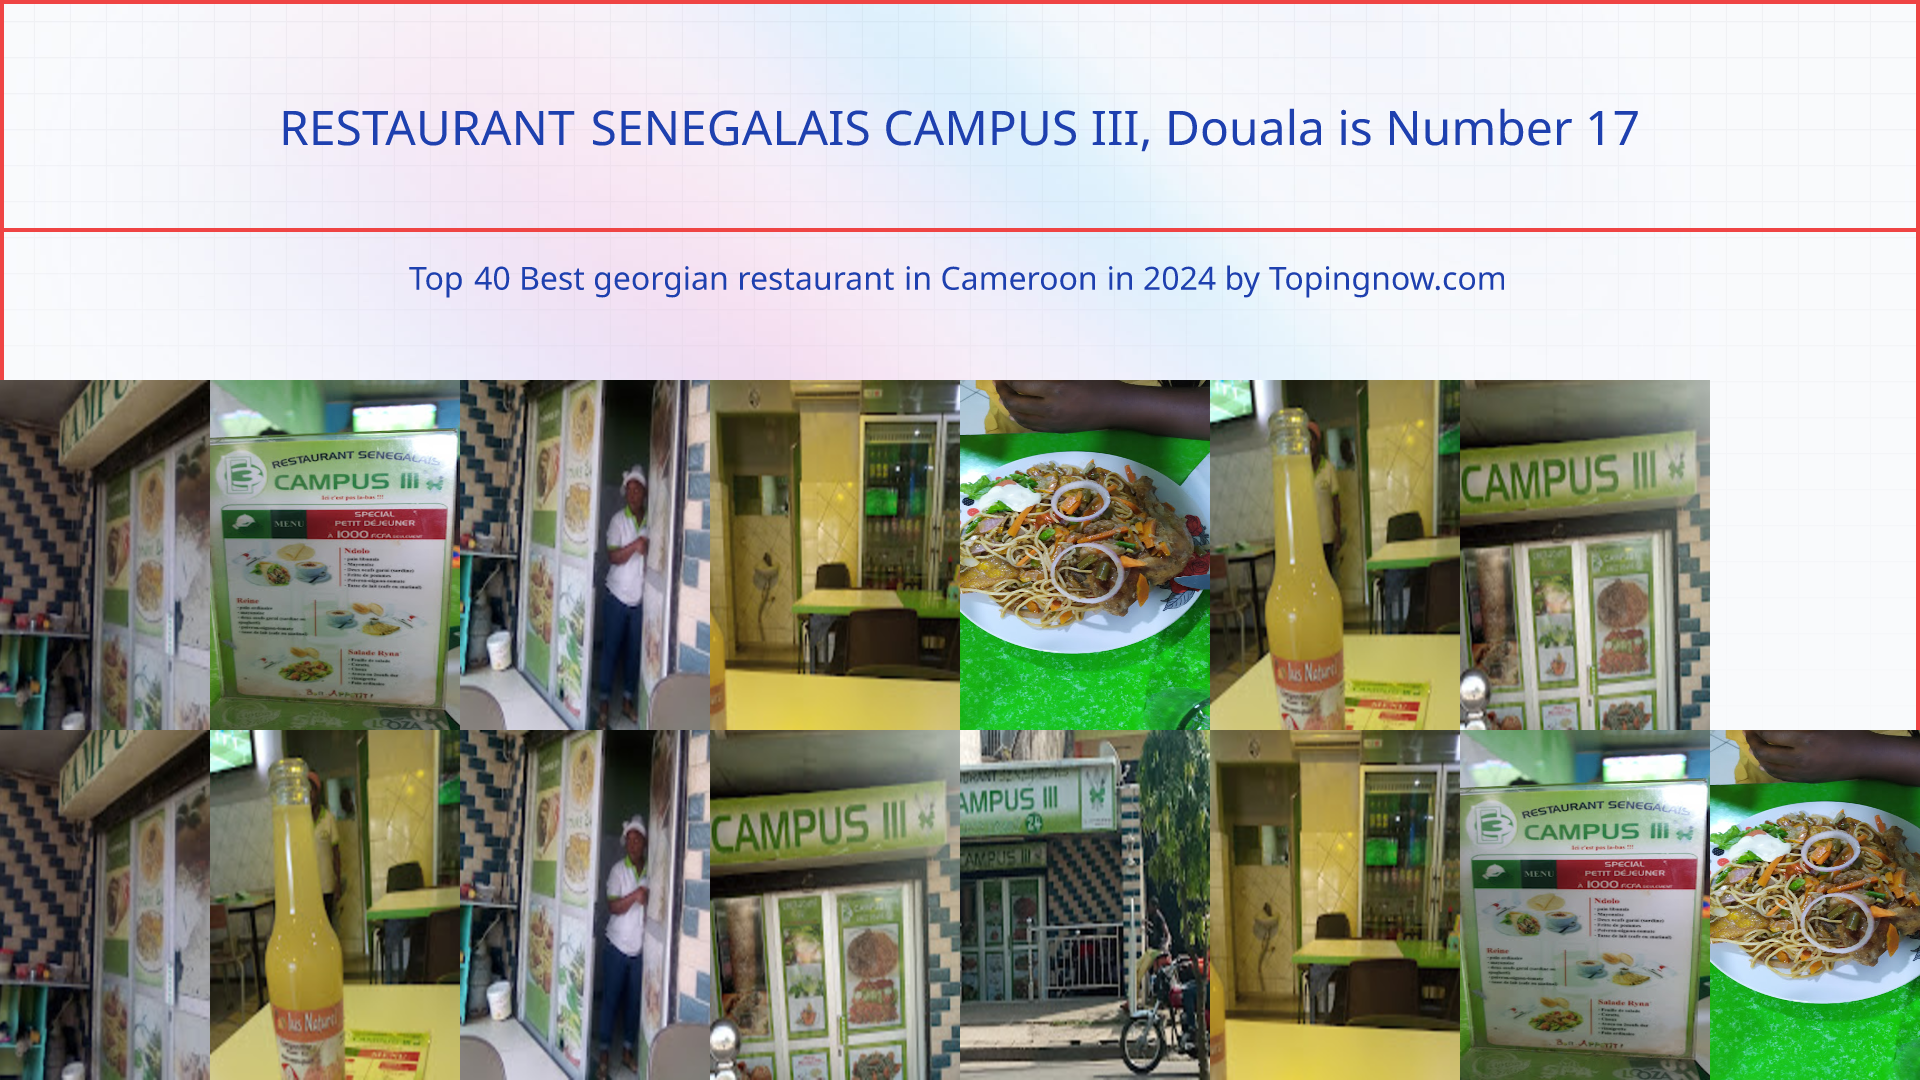 RESTAURANT SENEGALAIS CAMPUS III, Douala: Top 40 Best georgian restaurant in Cameroon in 2024